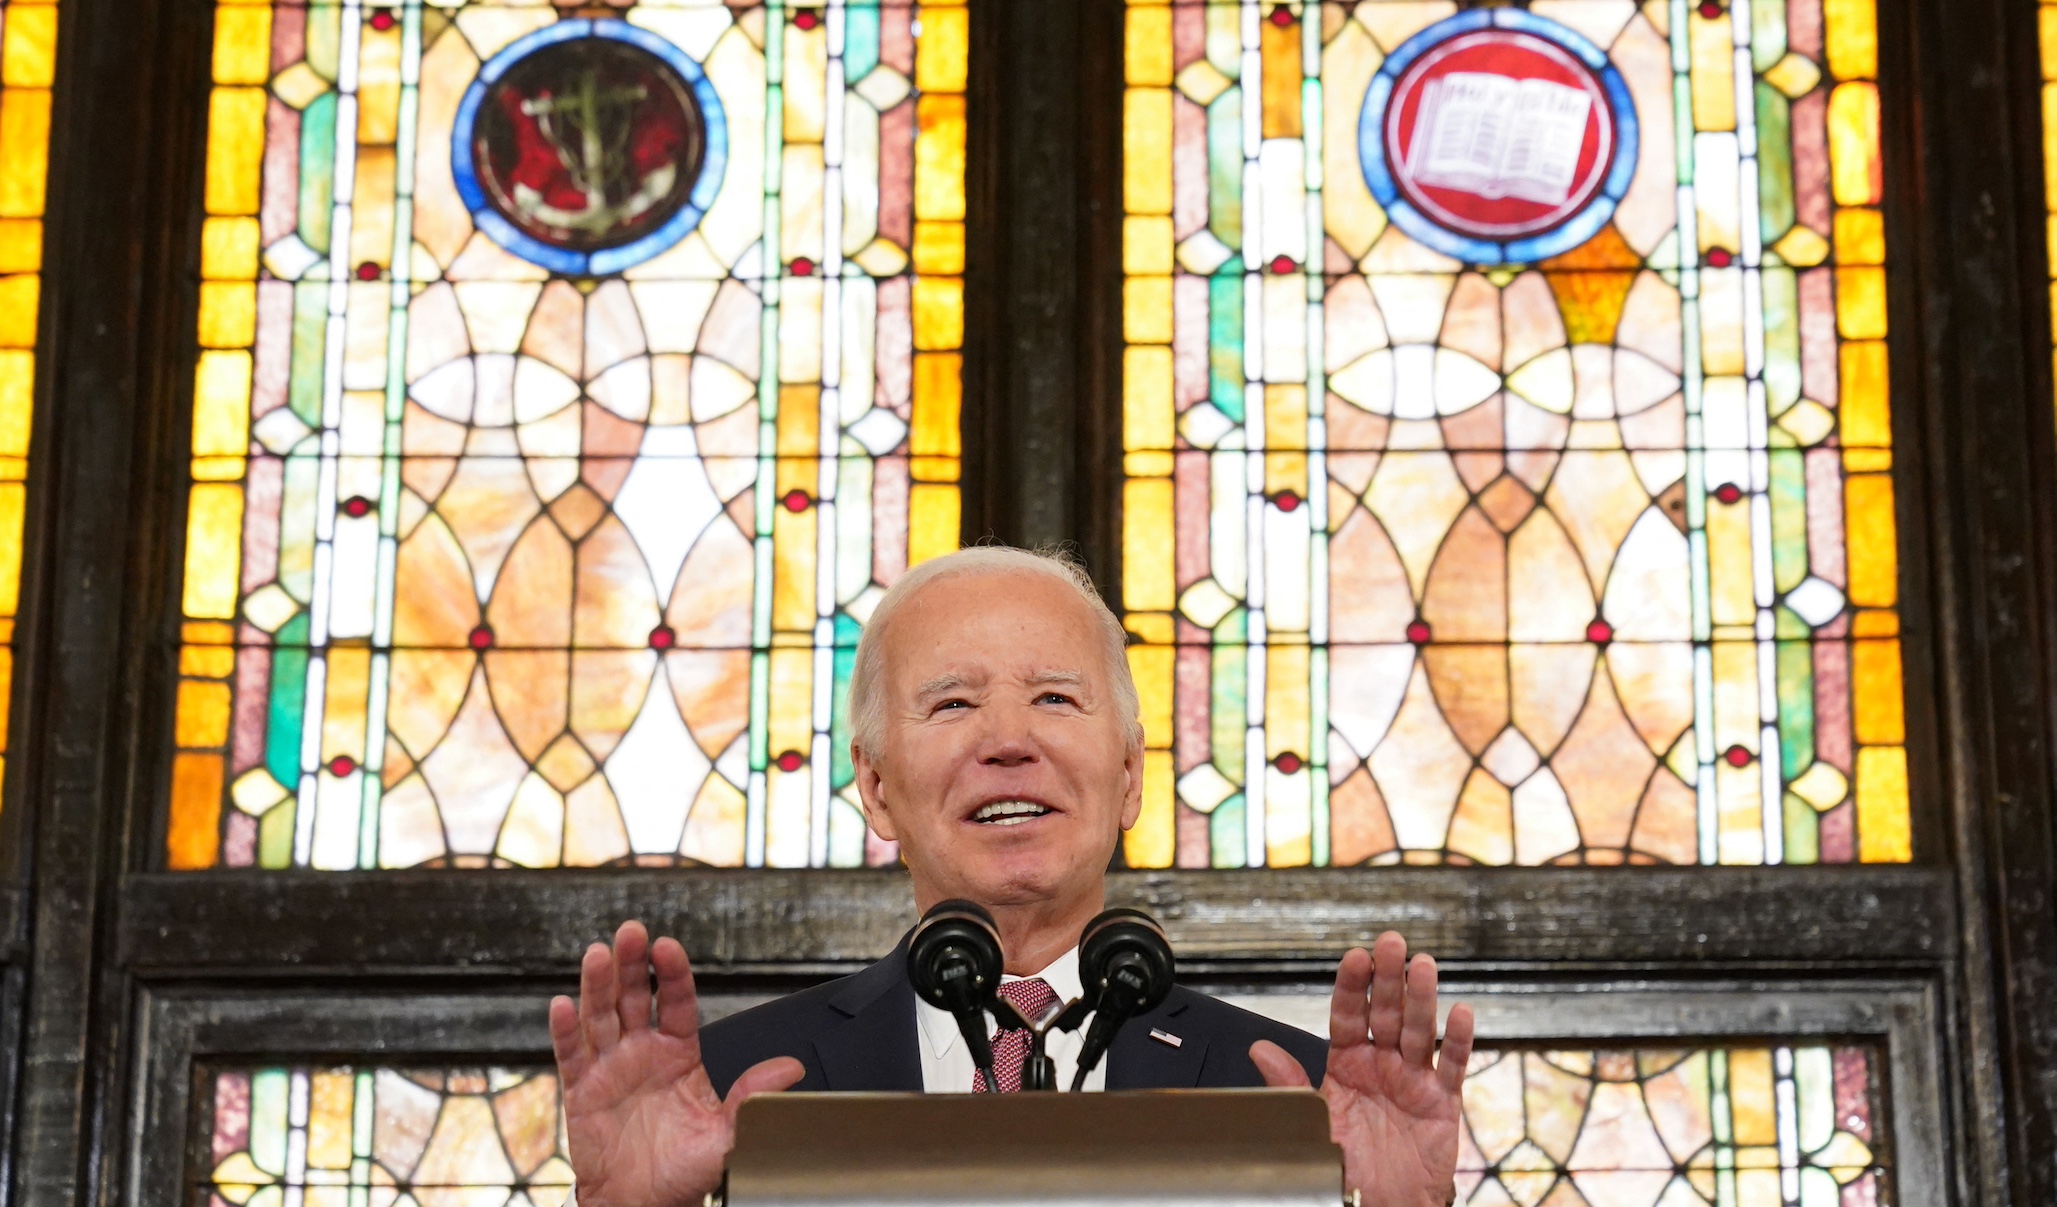 Biden Proclaims Easter Sunday ‘Transgender Day of Visibility’